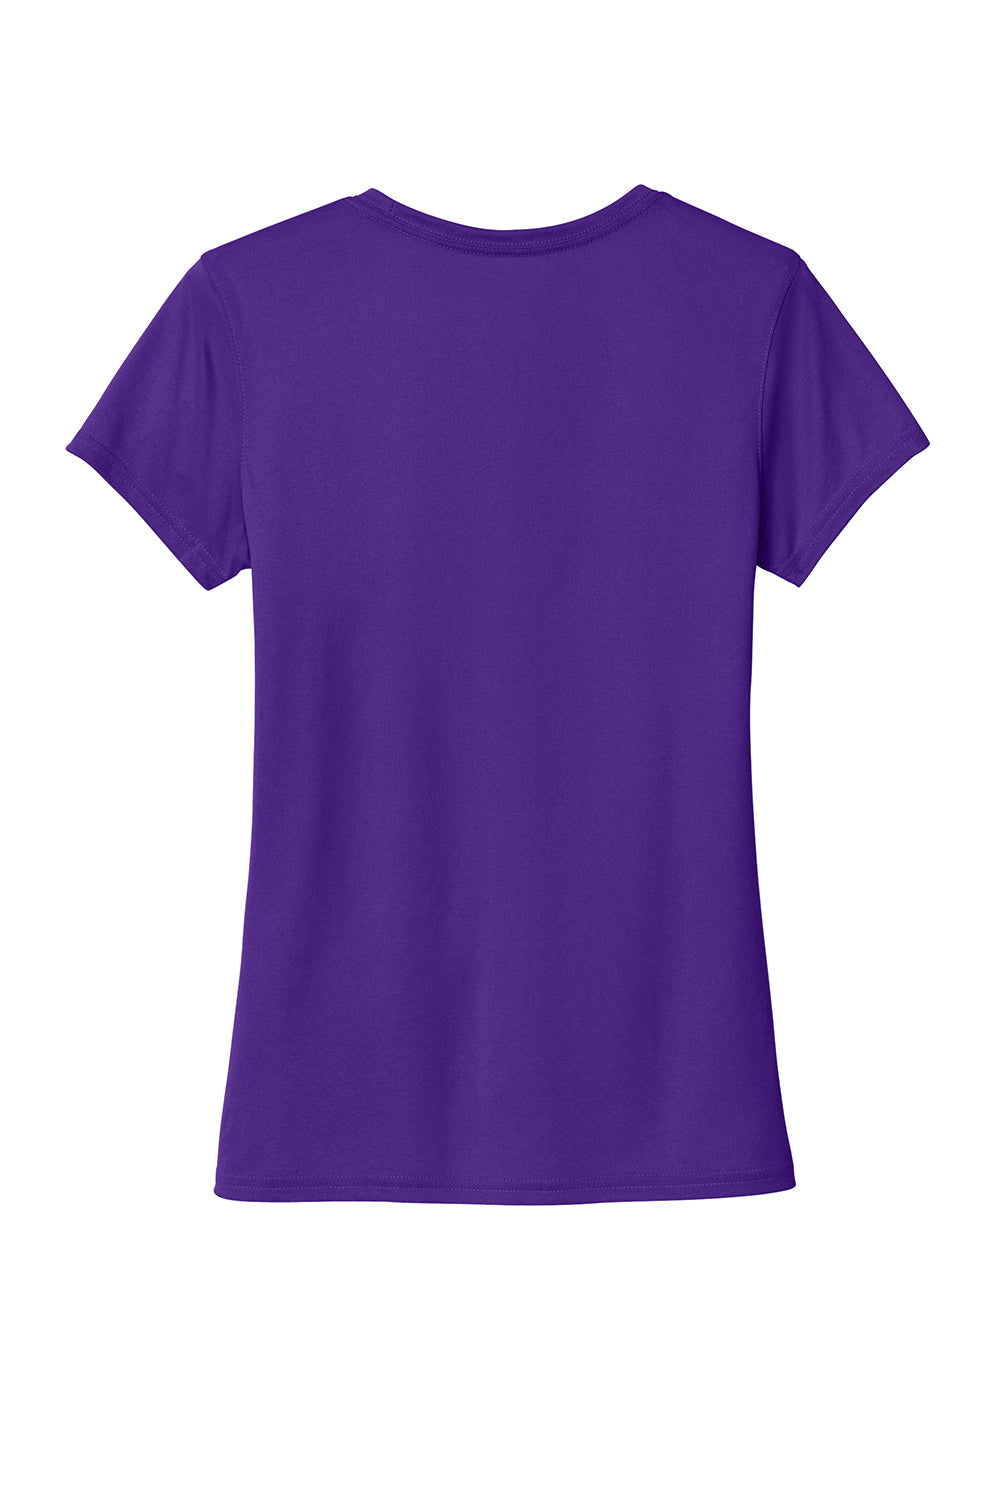 Nike DV7312 Womens Team rLegend Dri-Fit Moisture Wicking Short Sleeve Crewneck T-Shirt Court Purple Flat Back